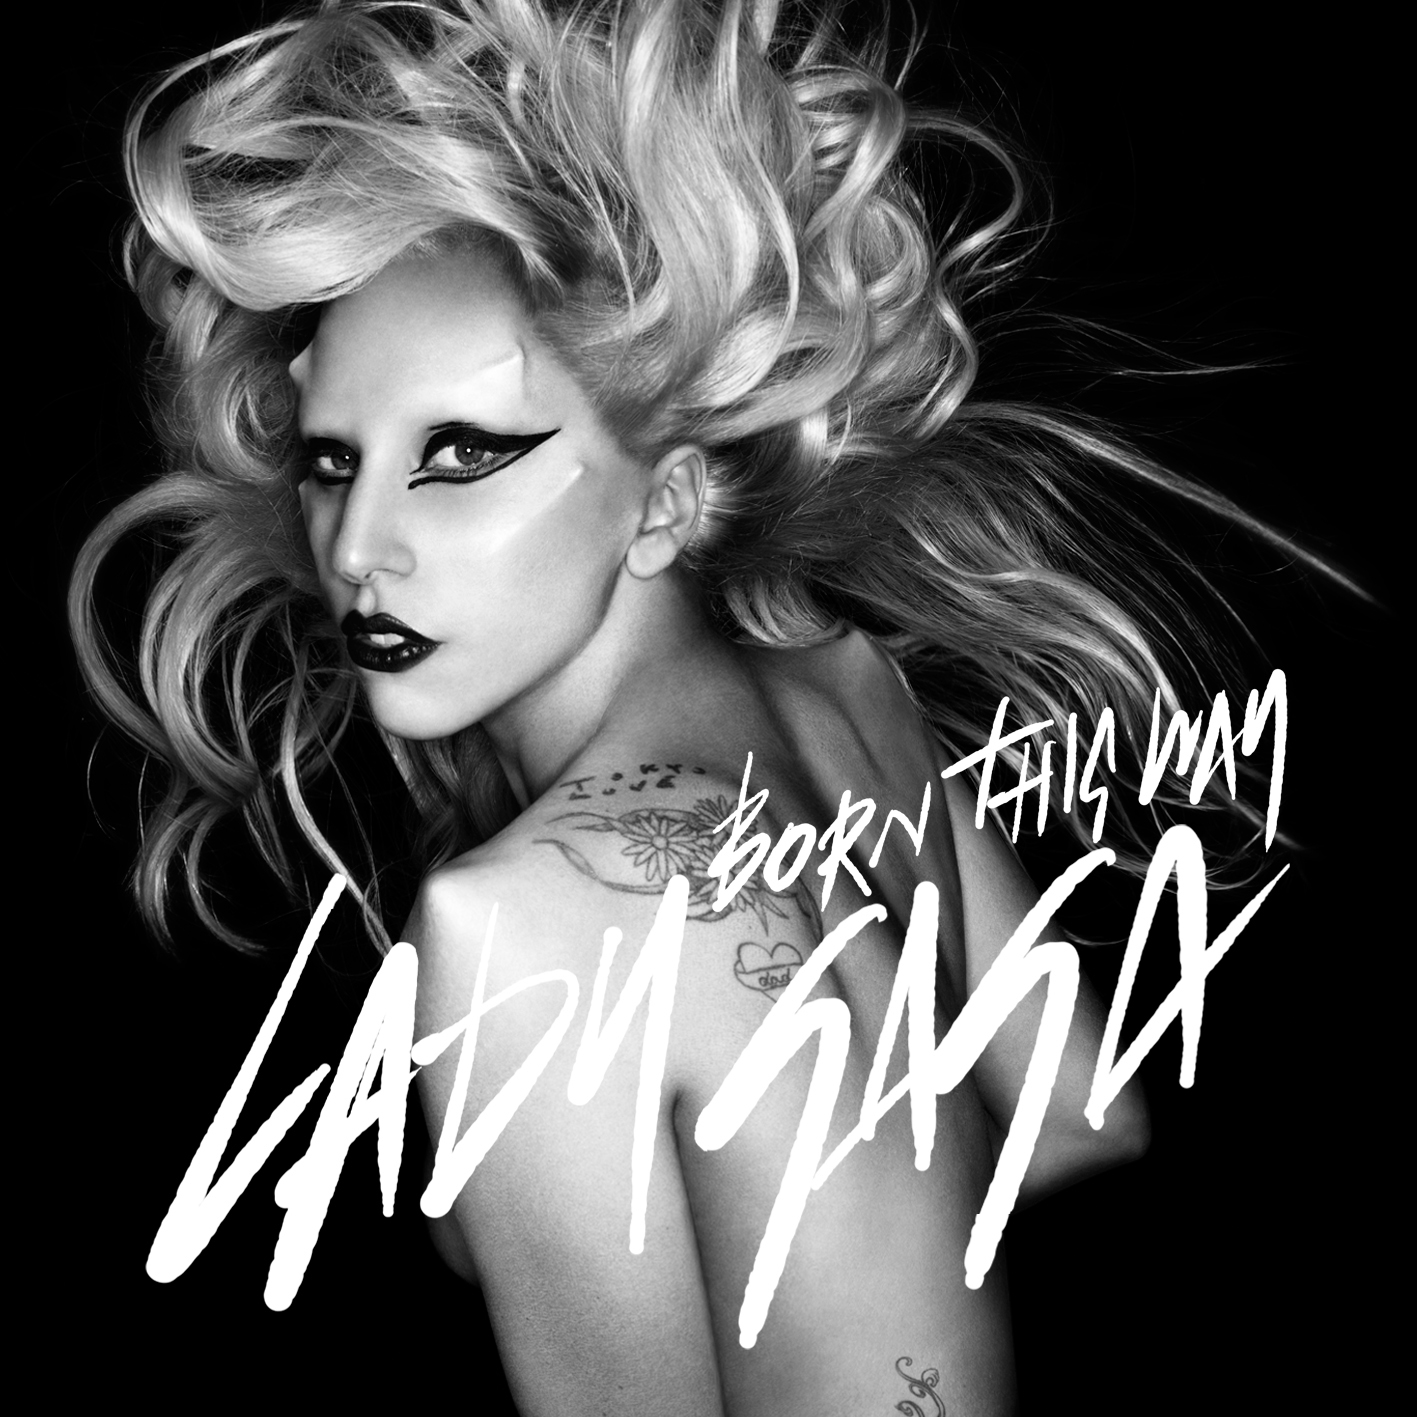 Lady Gaga's Born This Way cover